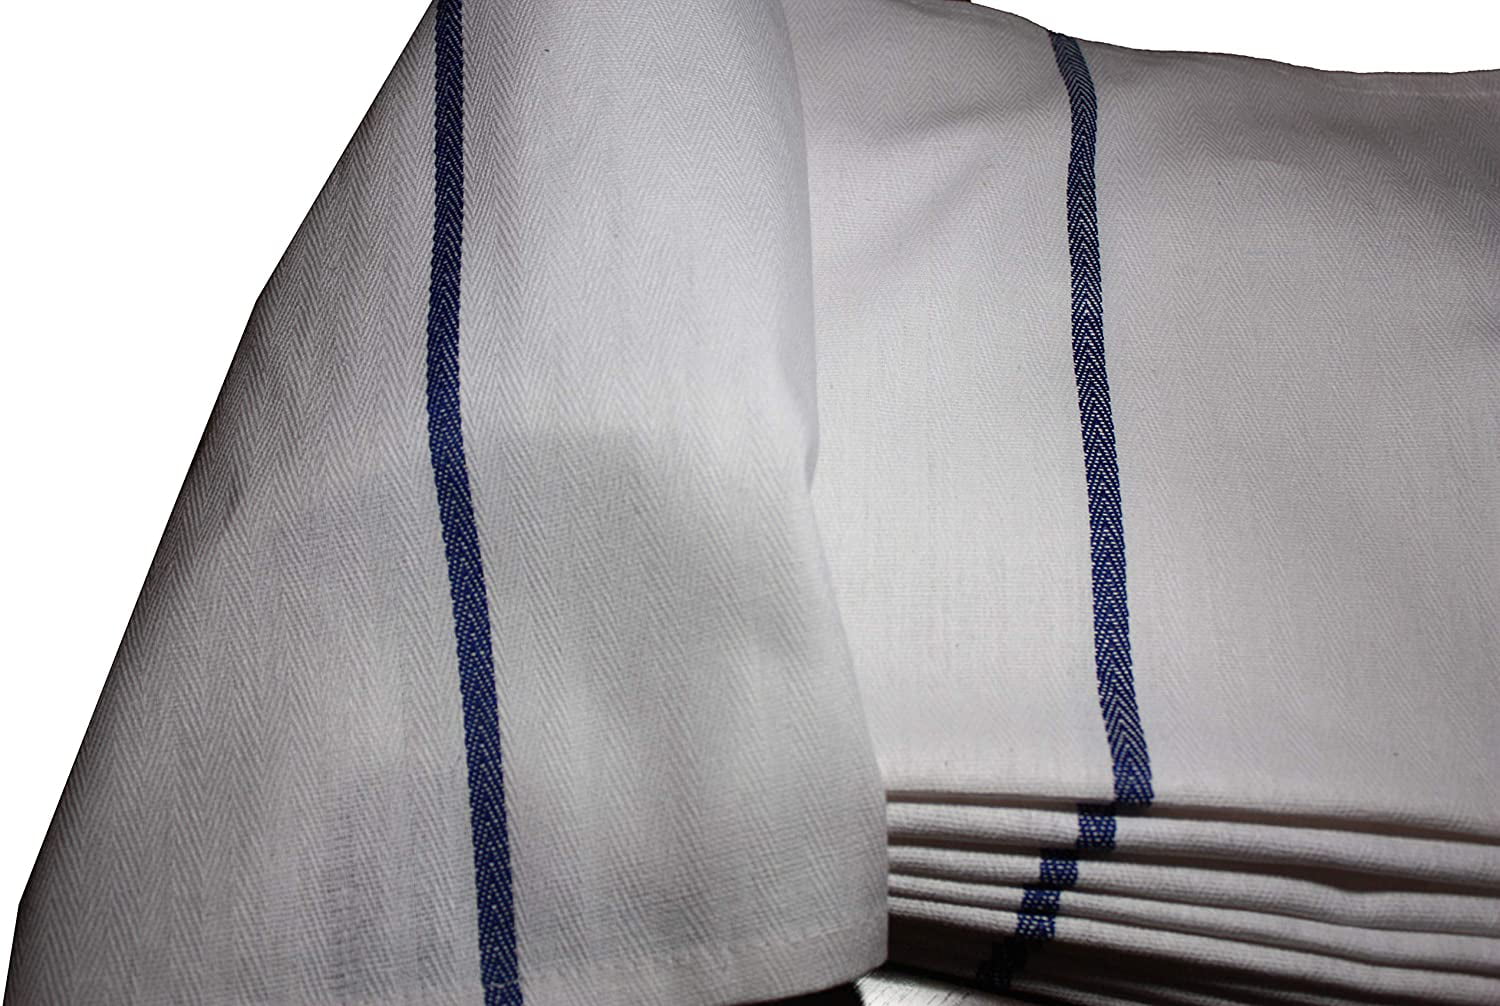 Dish Towels 6 Pack Bar style 15x26 in Herringbone 100% Cotton White Blue Stripe